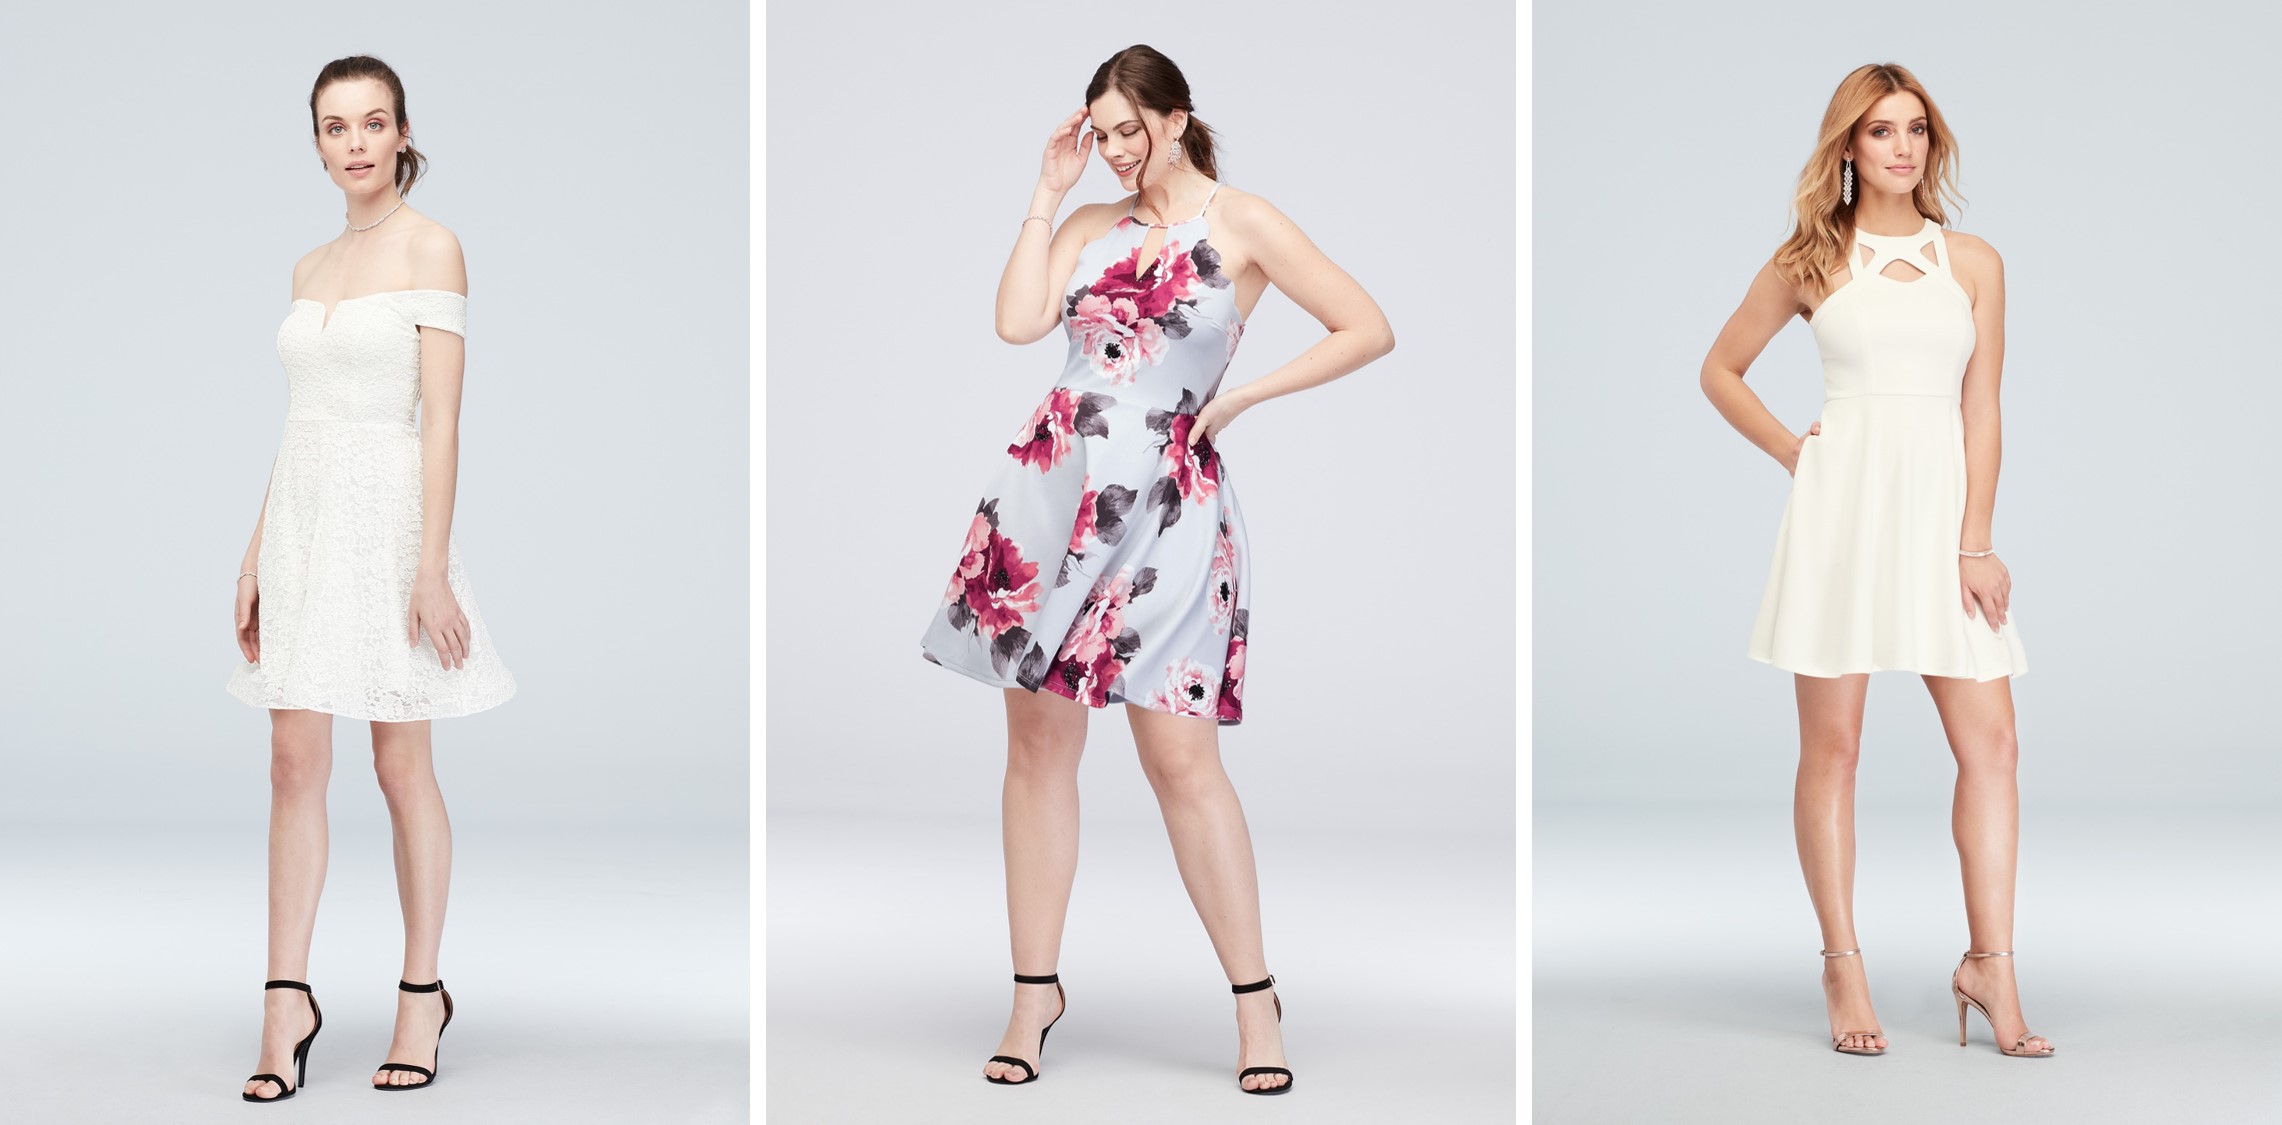 3 models in short white or floral print graduation dresses for 2019